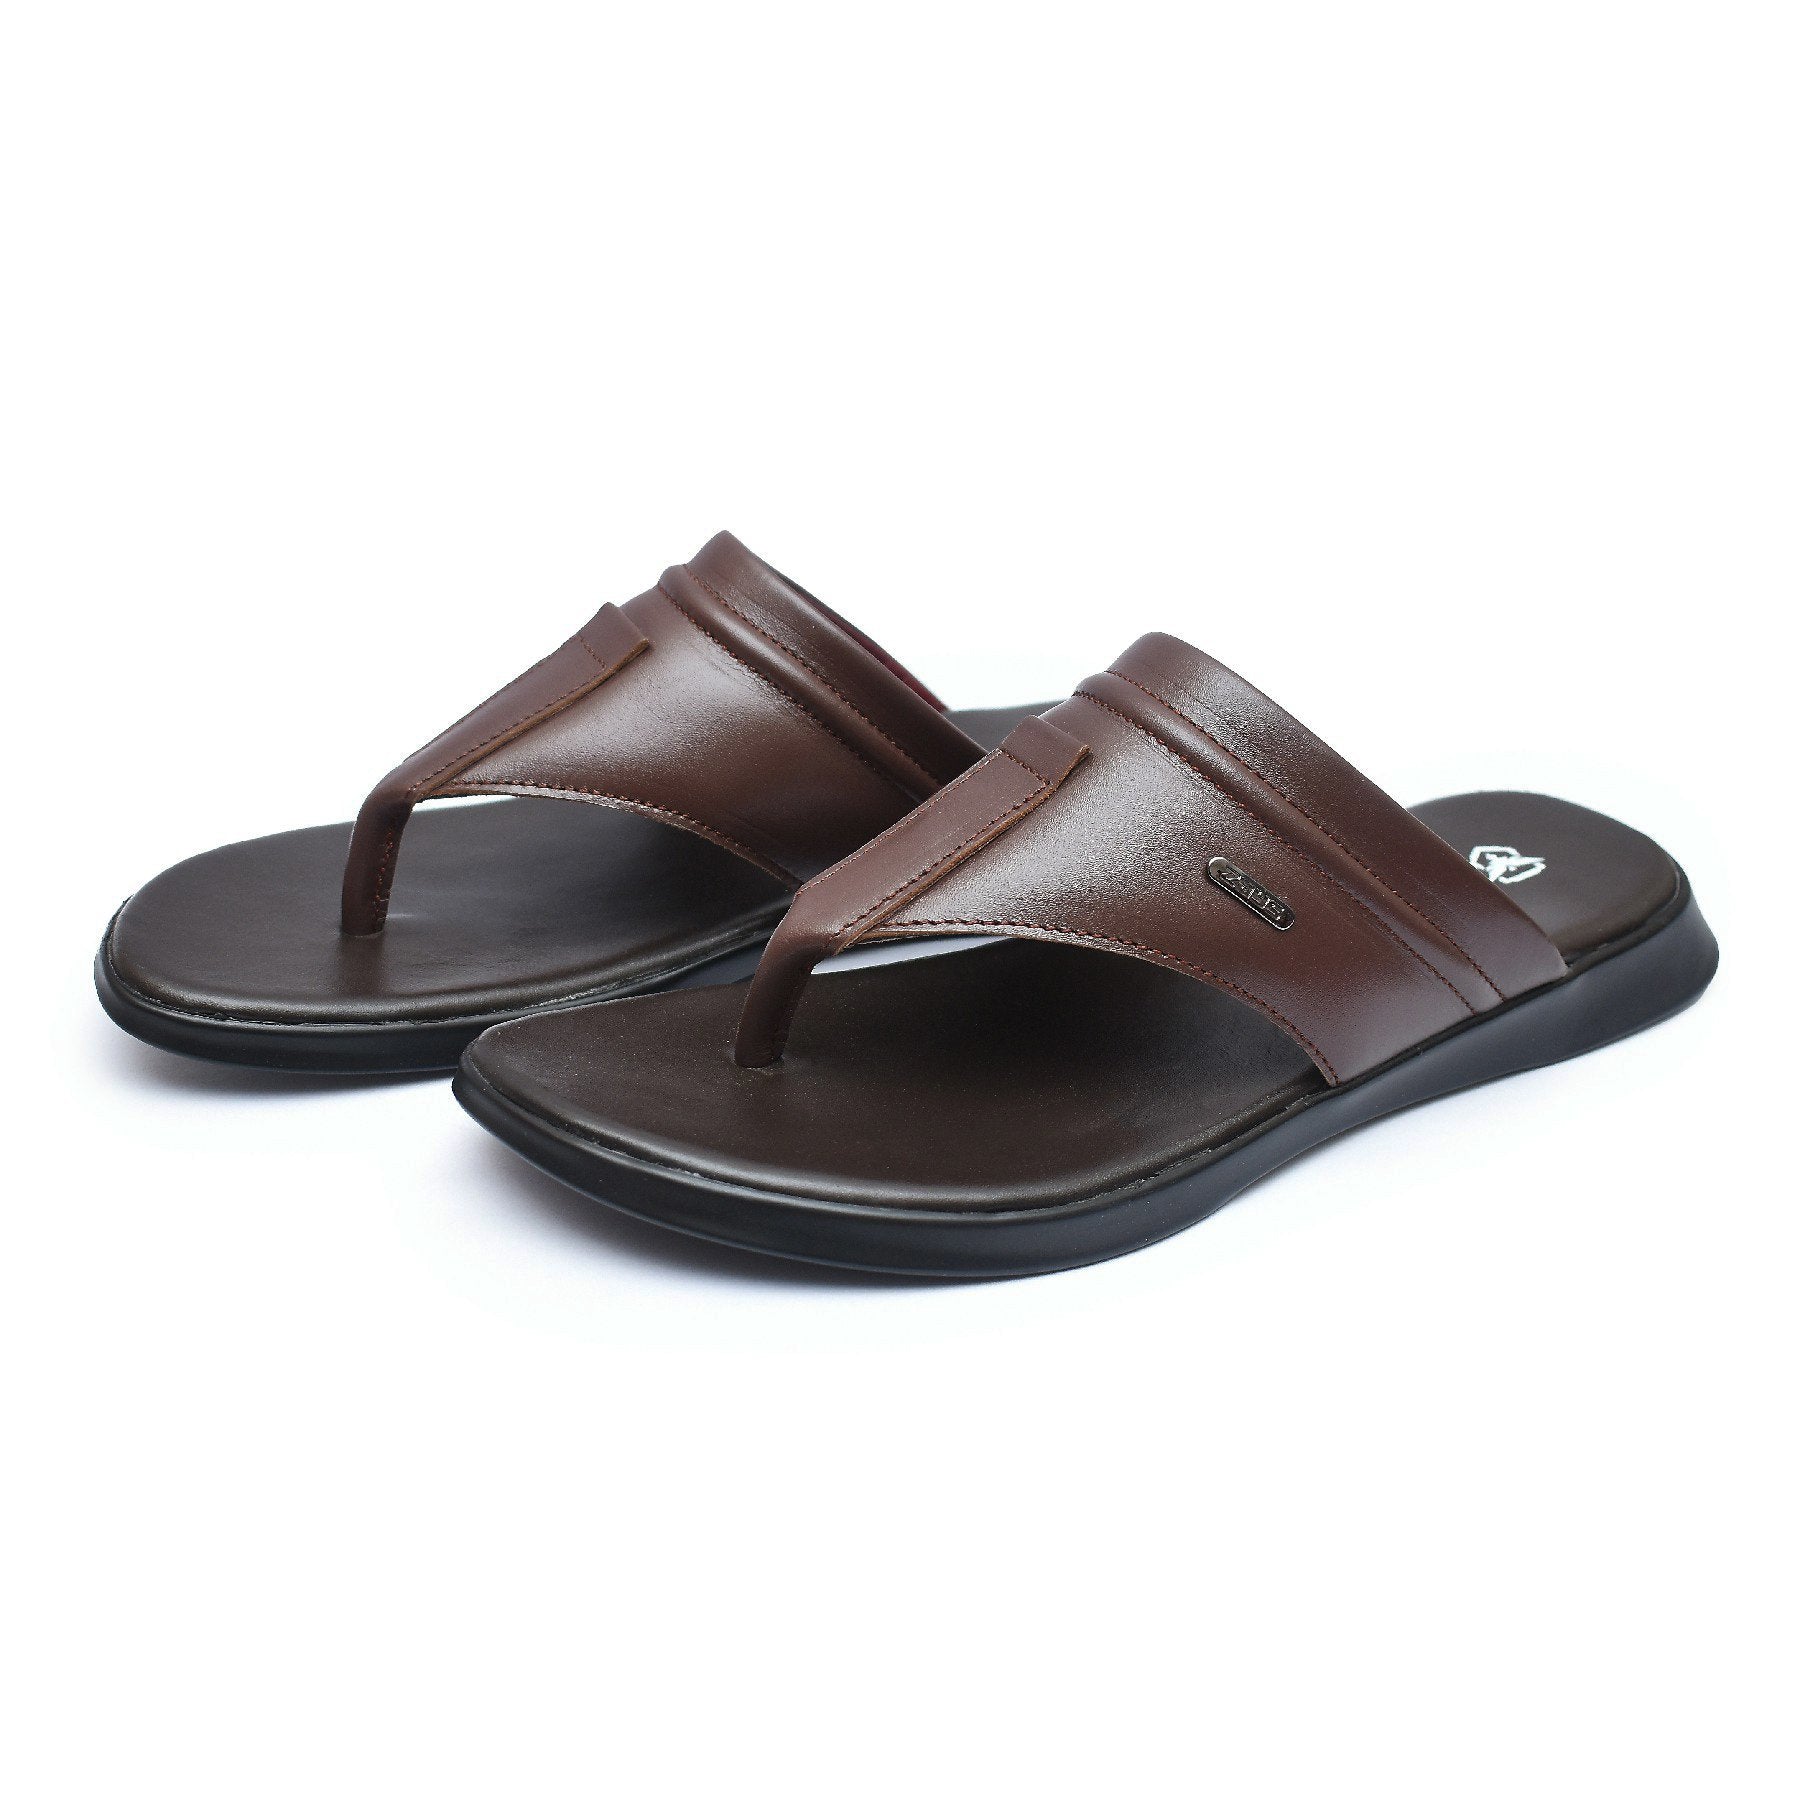 Zays Leather Sandal For Men (Chocolate) - ZAYS-A-67